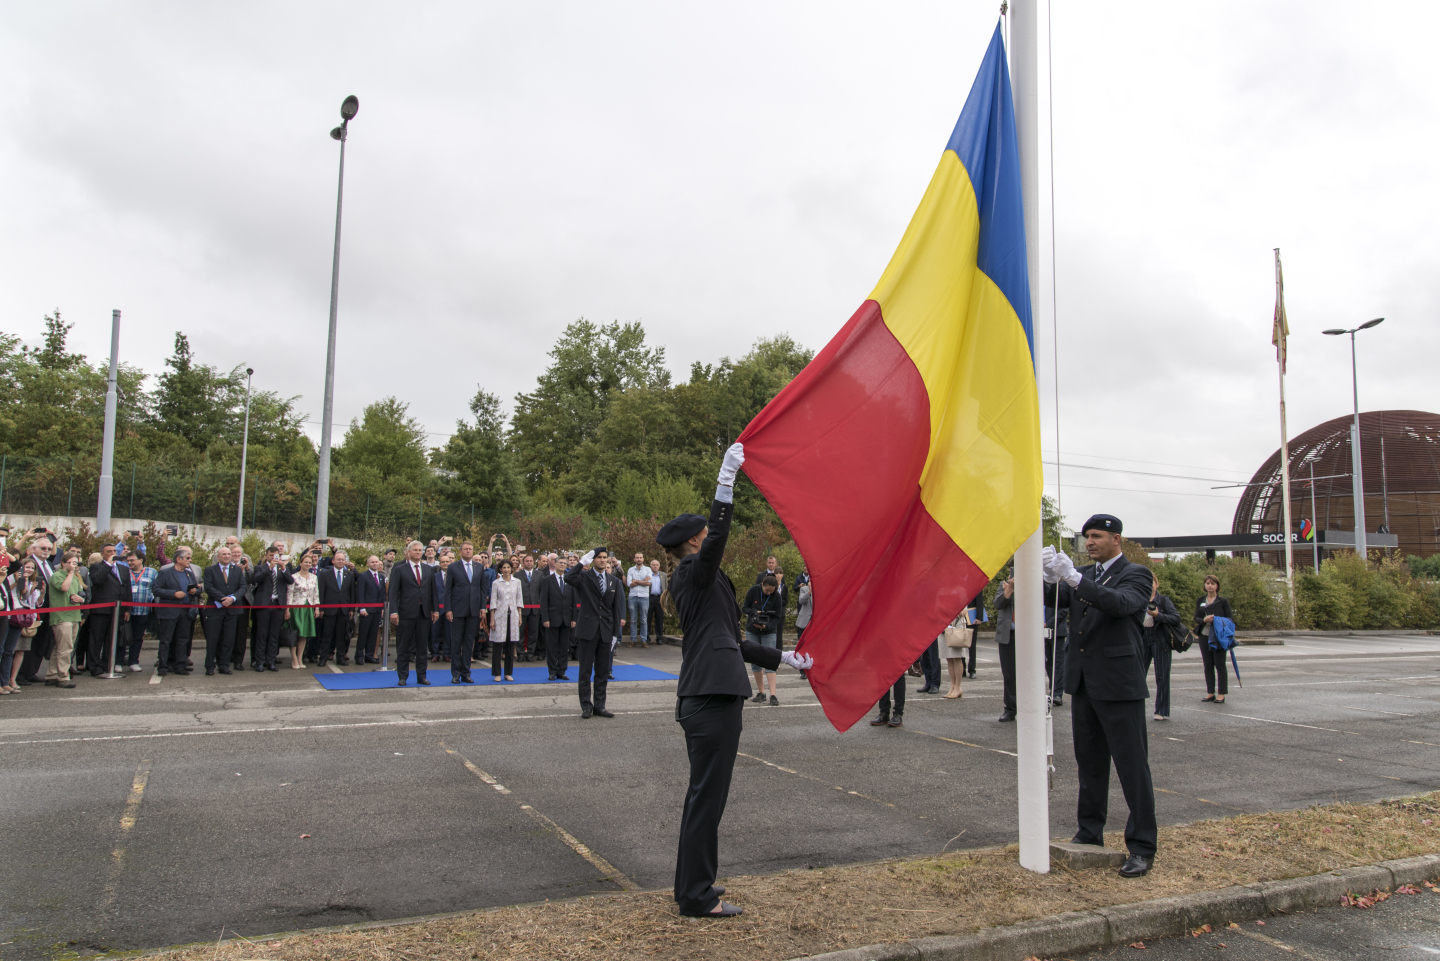 Romania's flag raised at CERN 